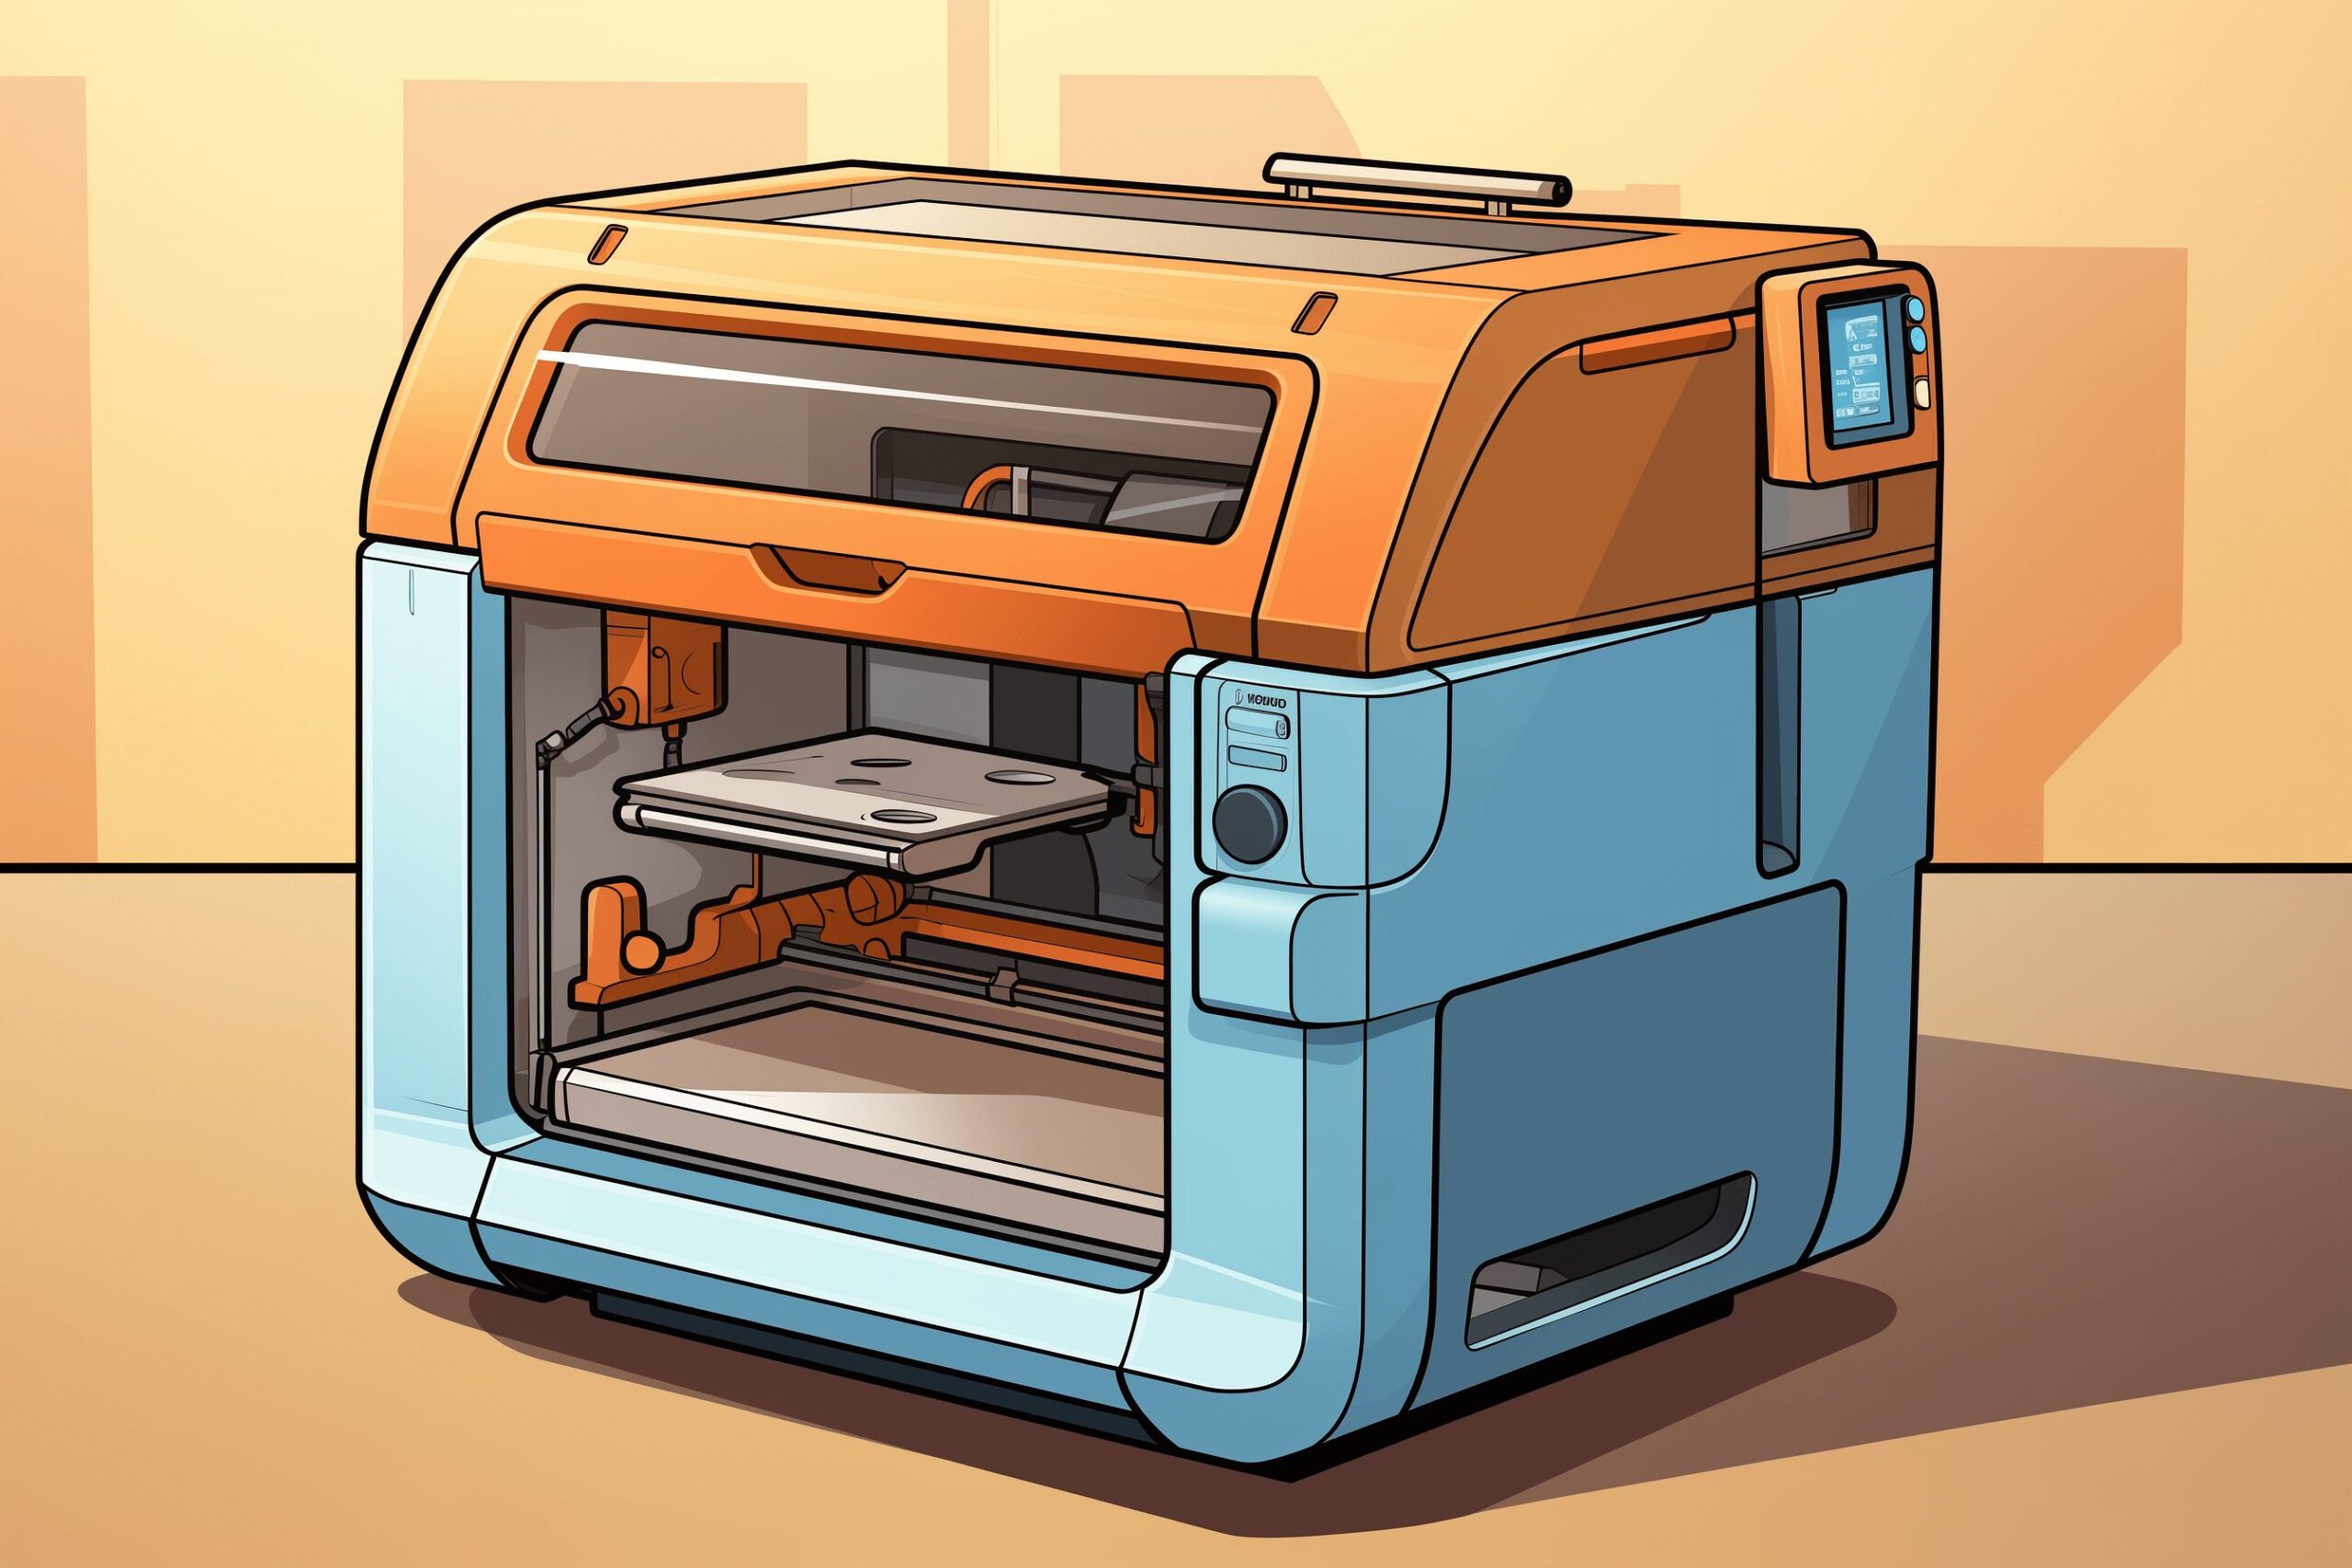 A compact 3D Printer